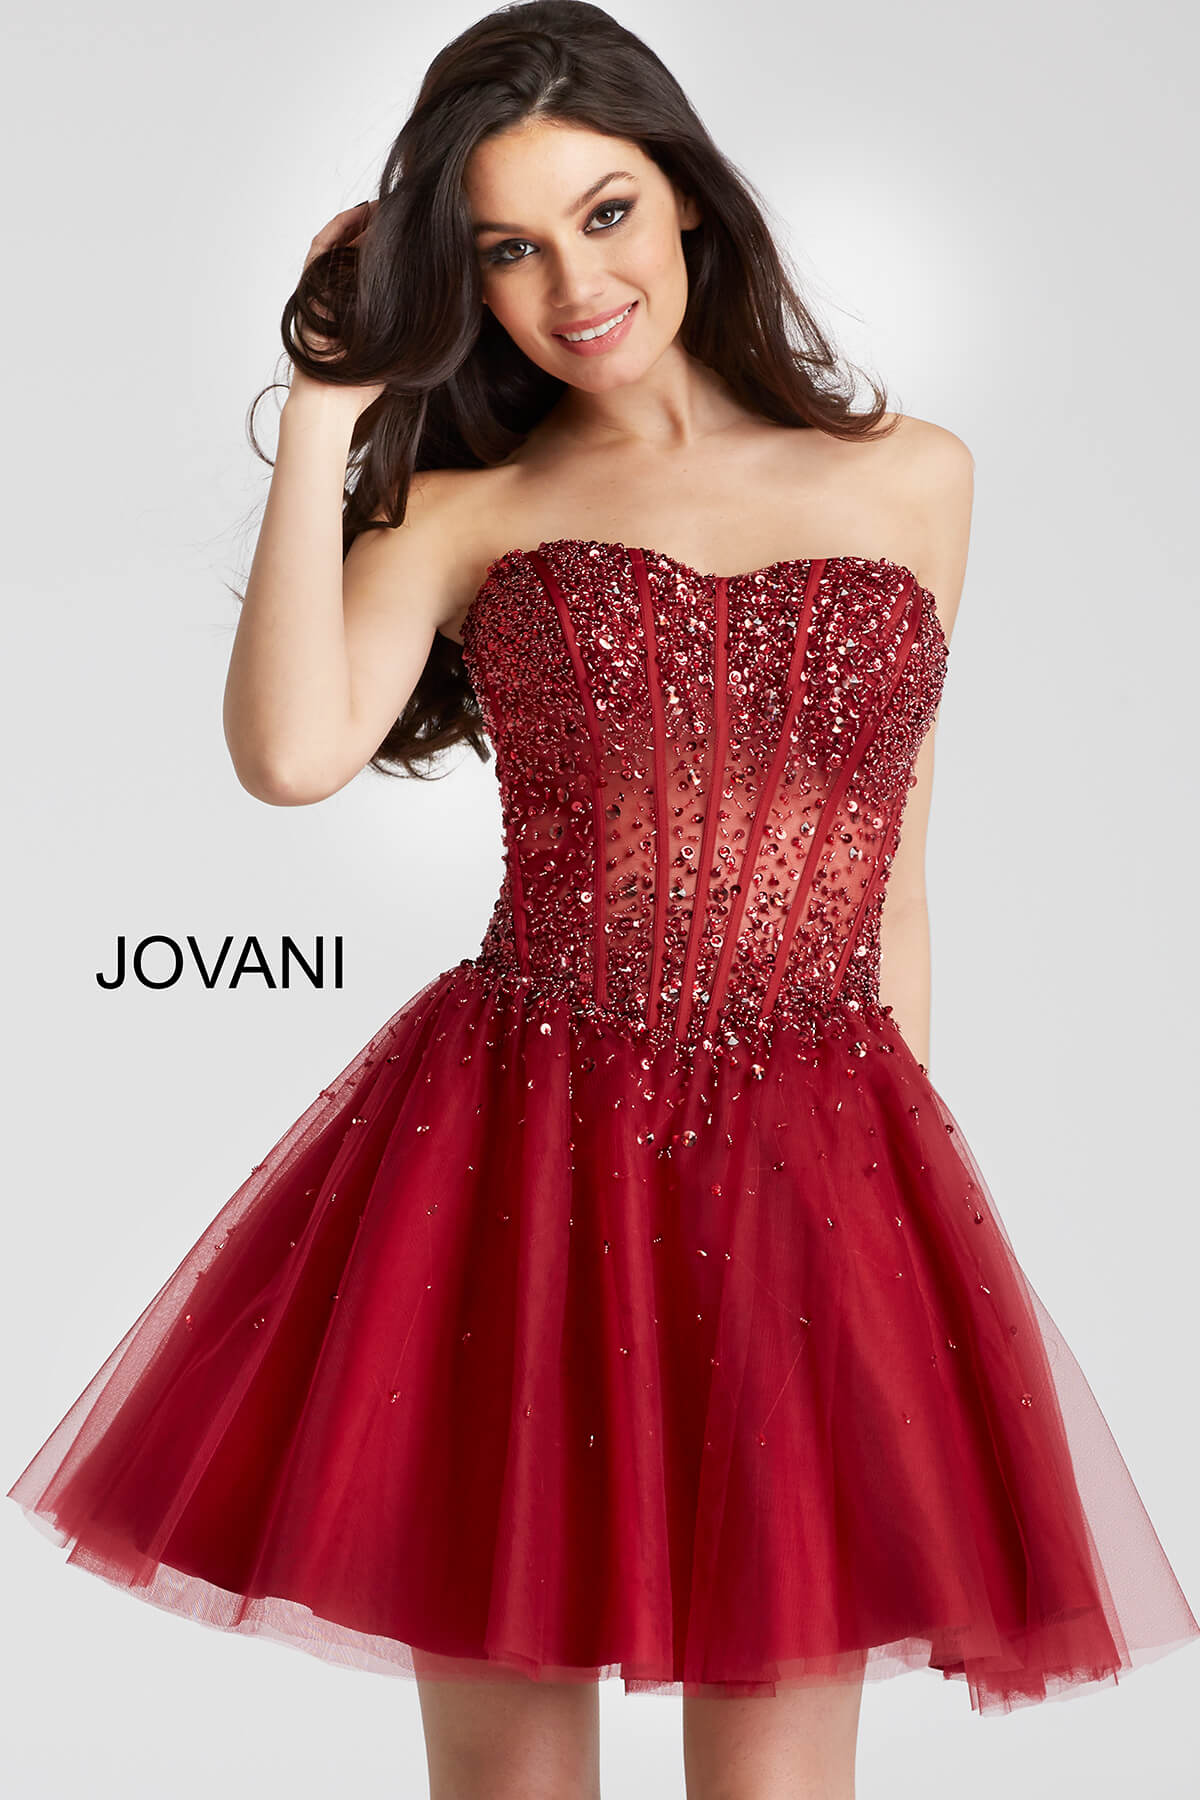 Jovani 55142 Embellished Fit and Flare Tulle Dress